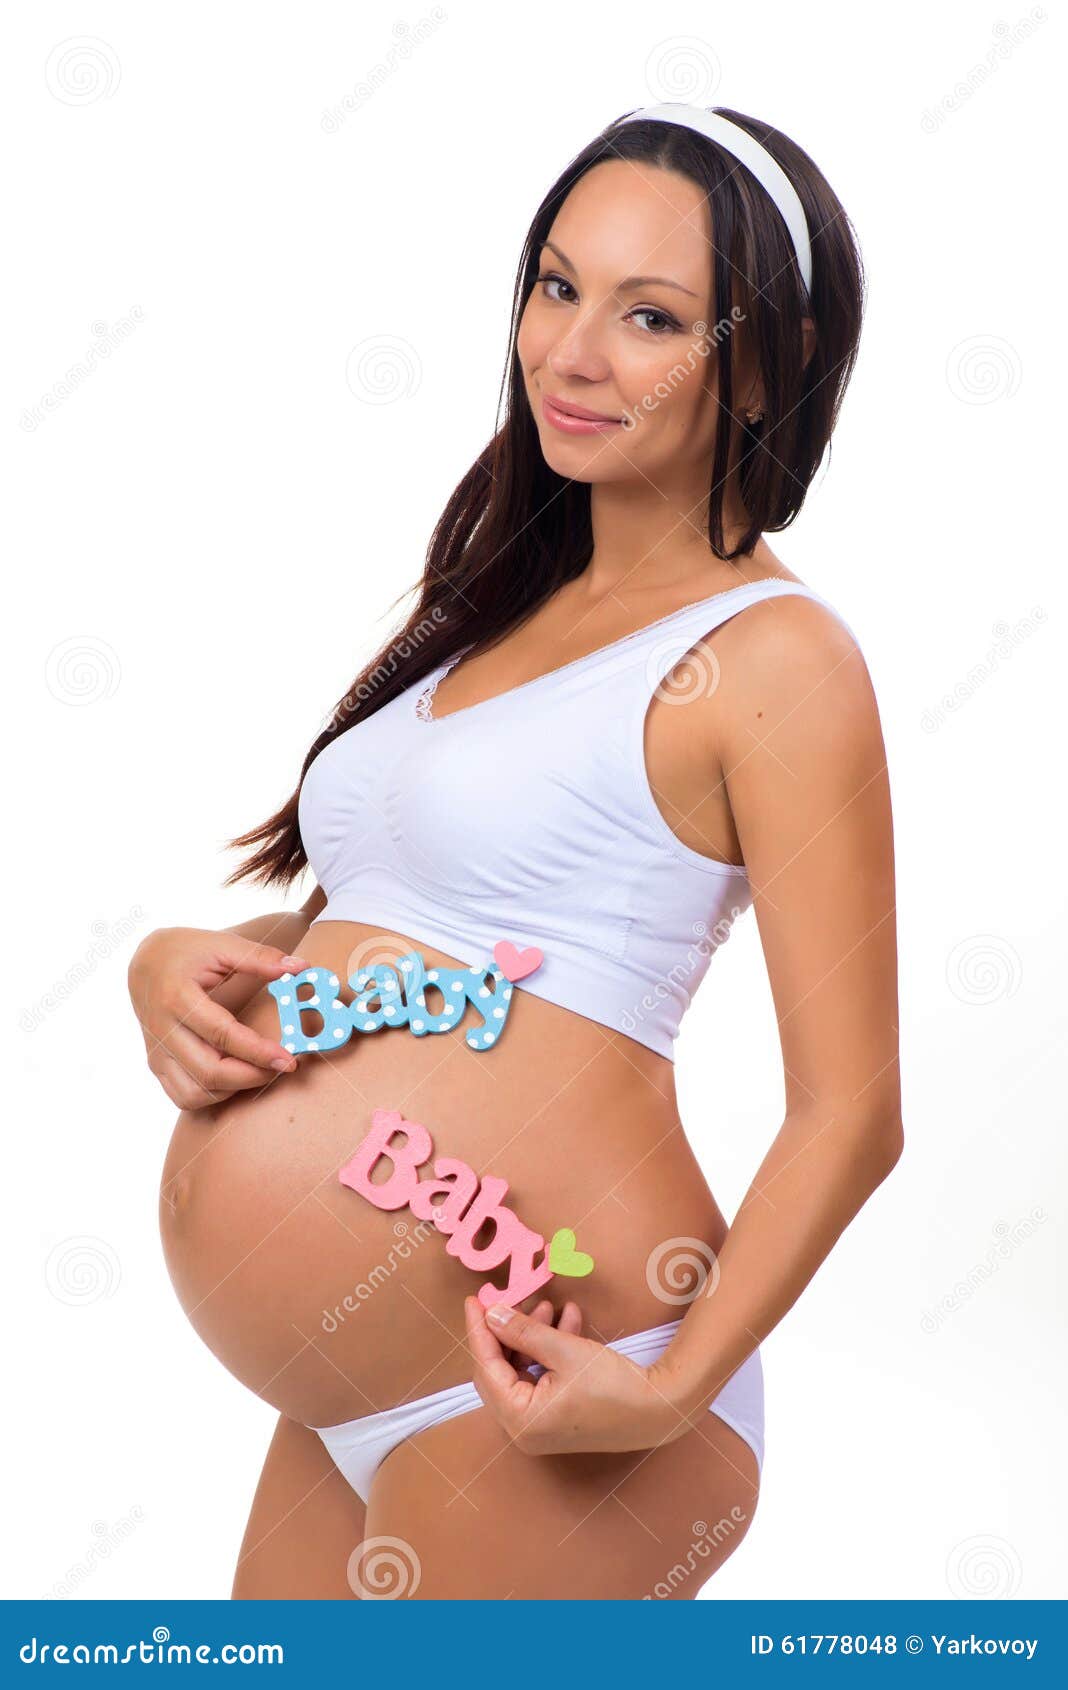 woman sex toys Pregnant